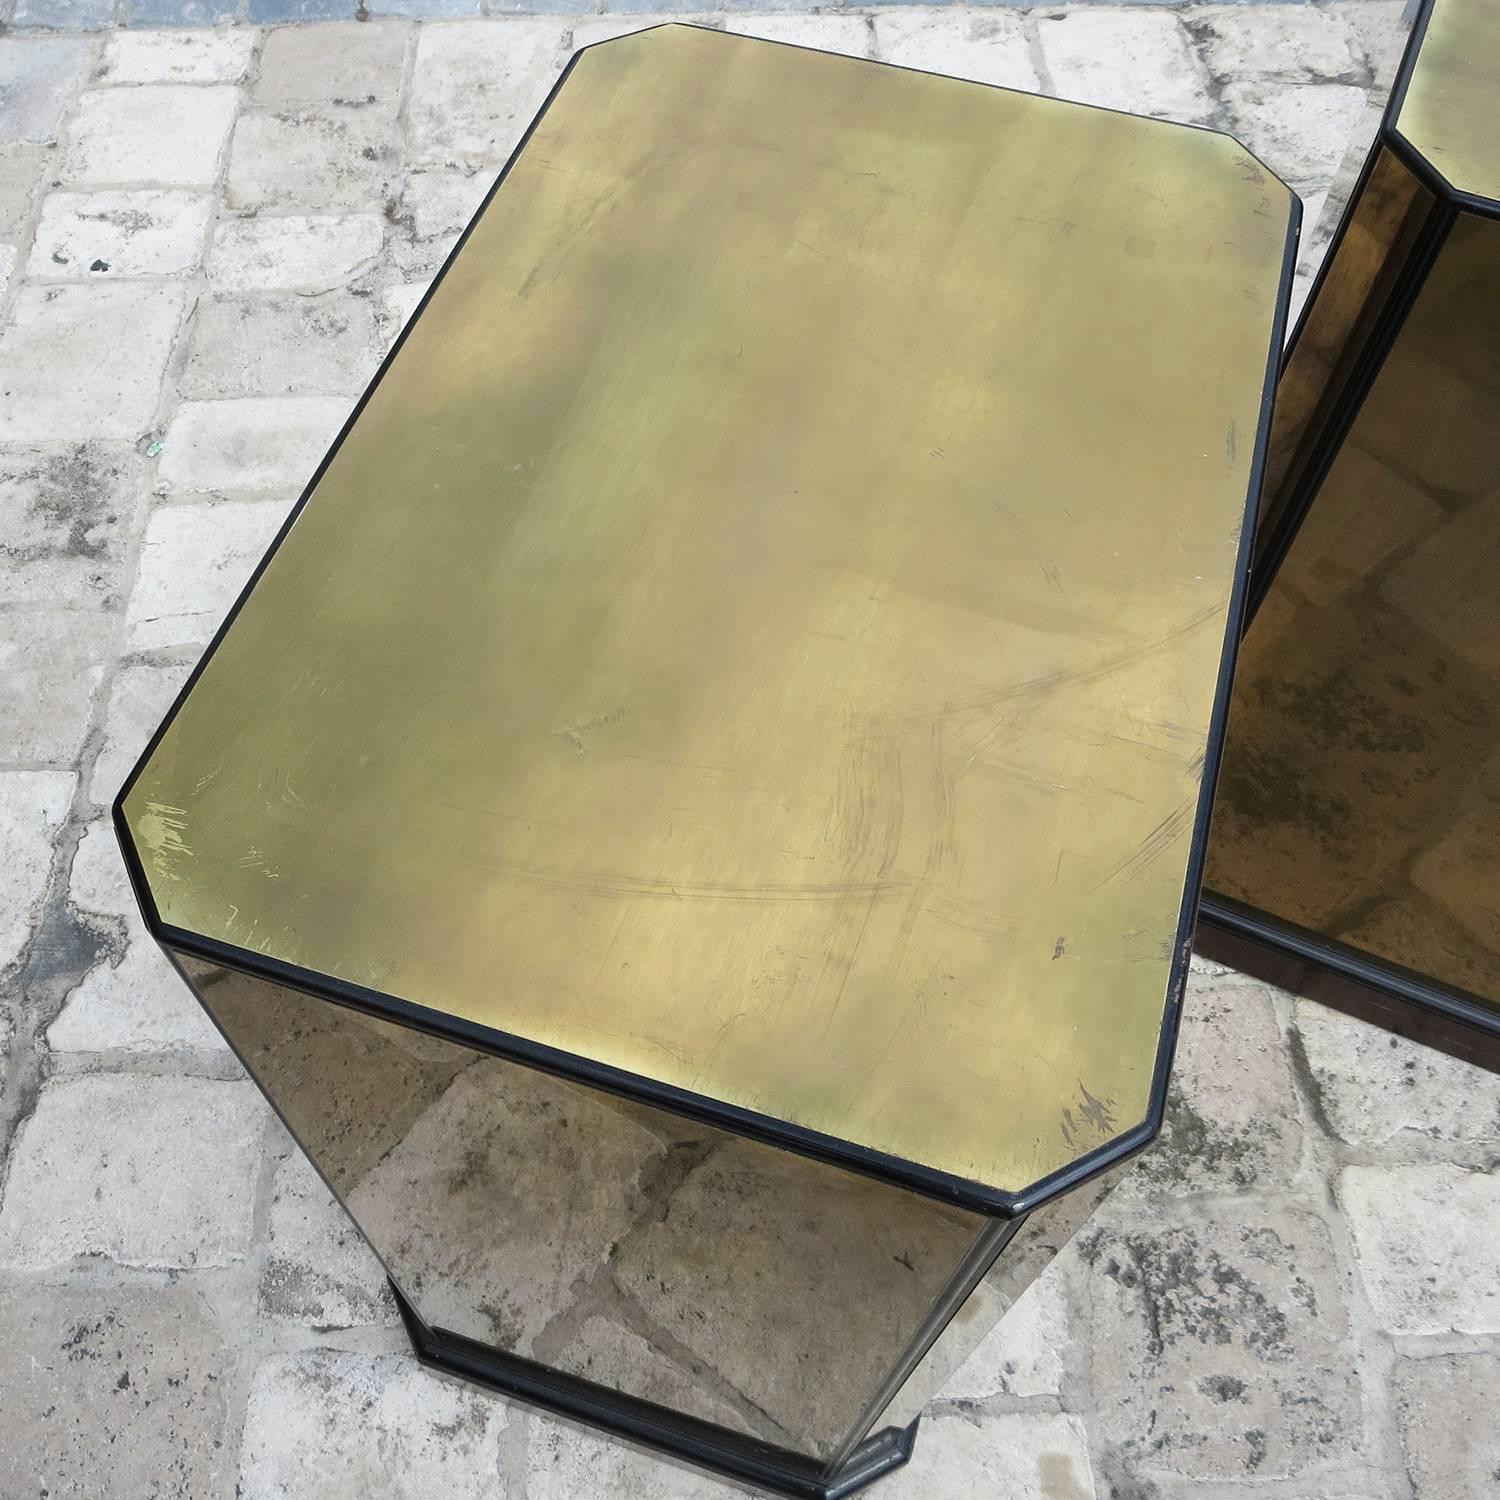 brass pedestal table base